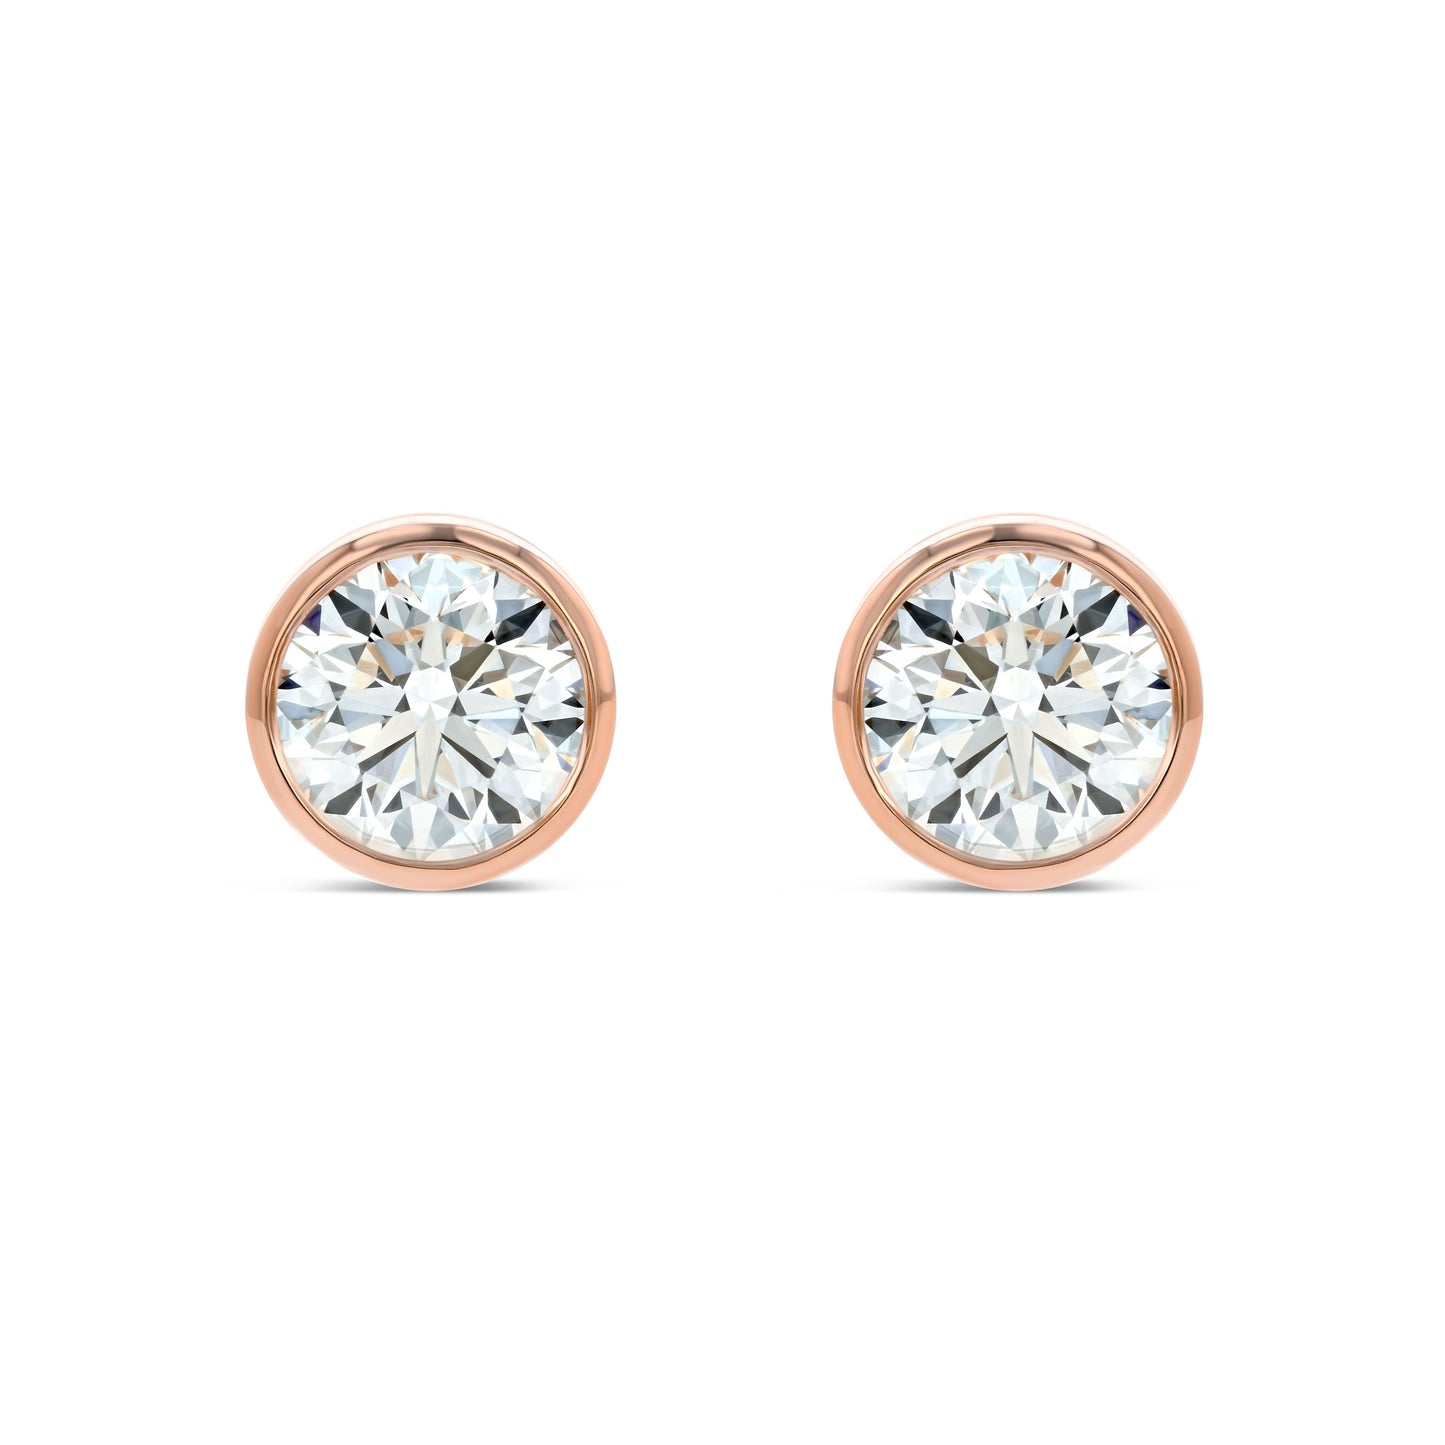 14k Rose Gold Bezel Round Diamond Stud Earrings 1/2ctw (4.1mm Ea), G-h Color, I1 Clarity